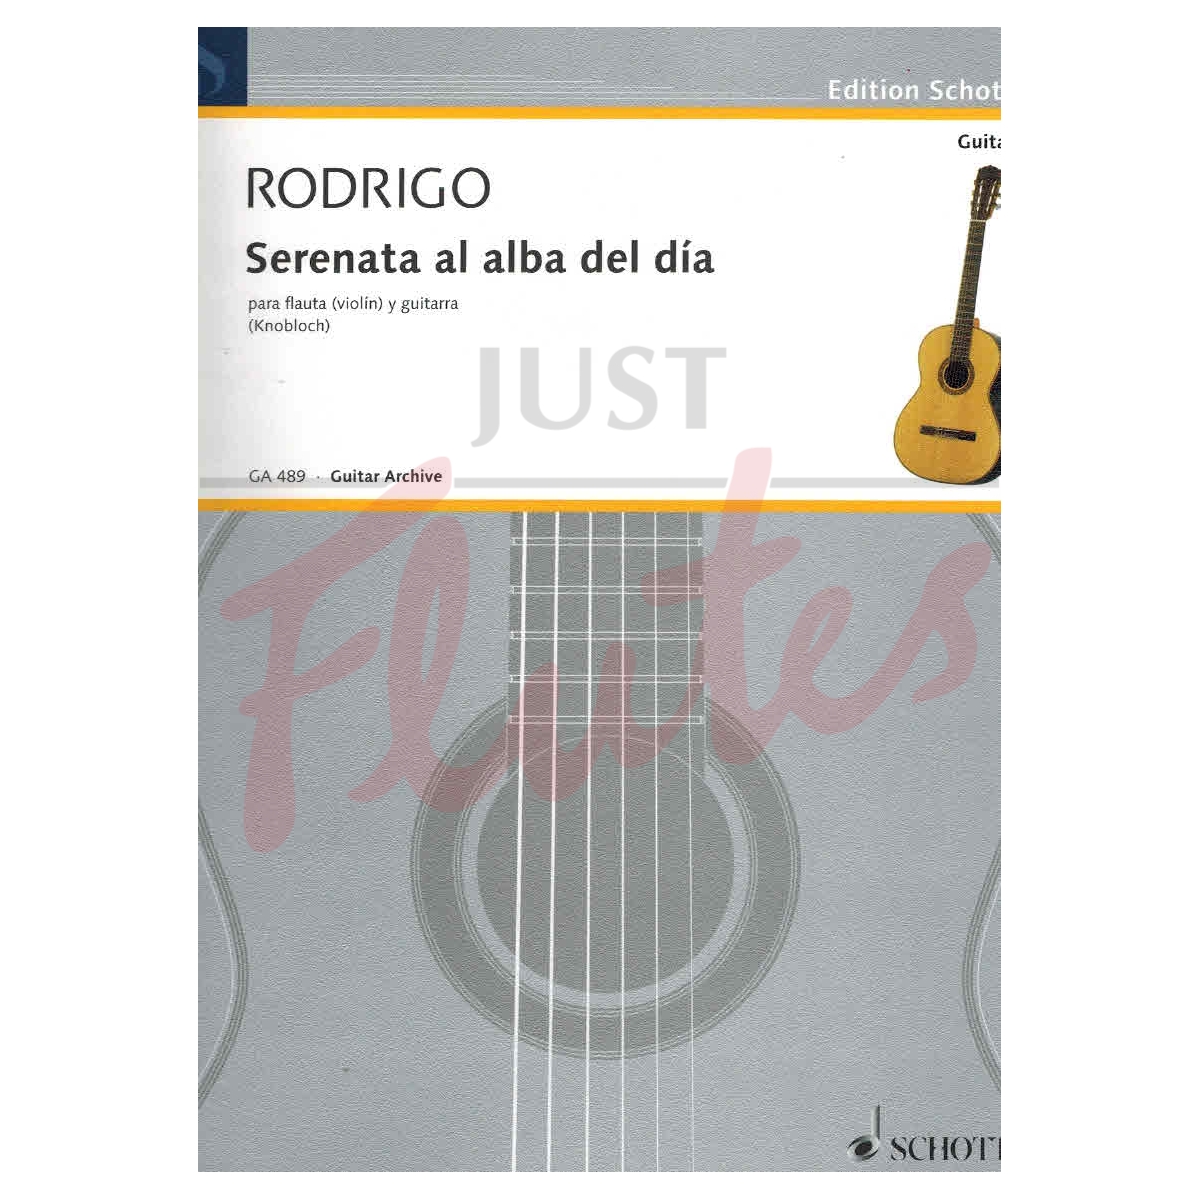 Serenata al Alba del Dia for Flute and Guitar